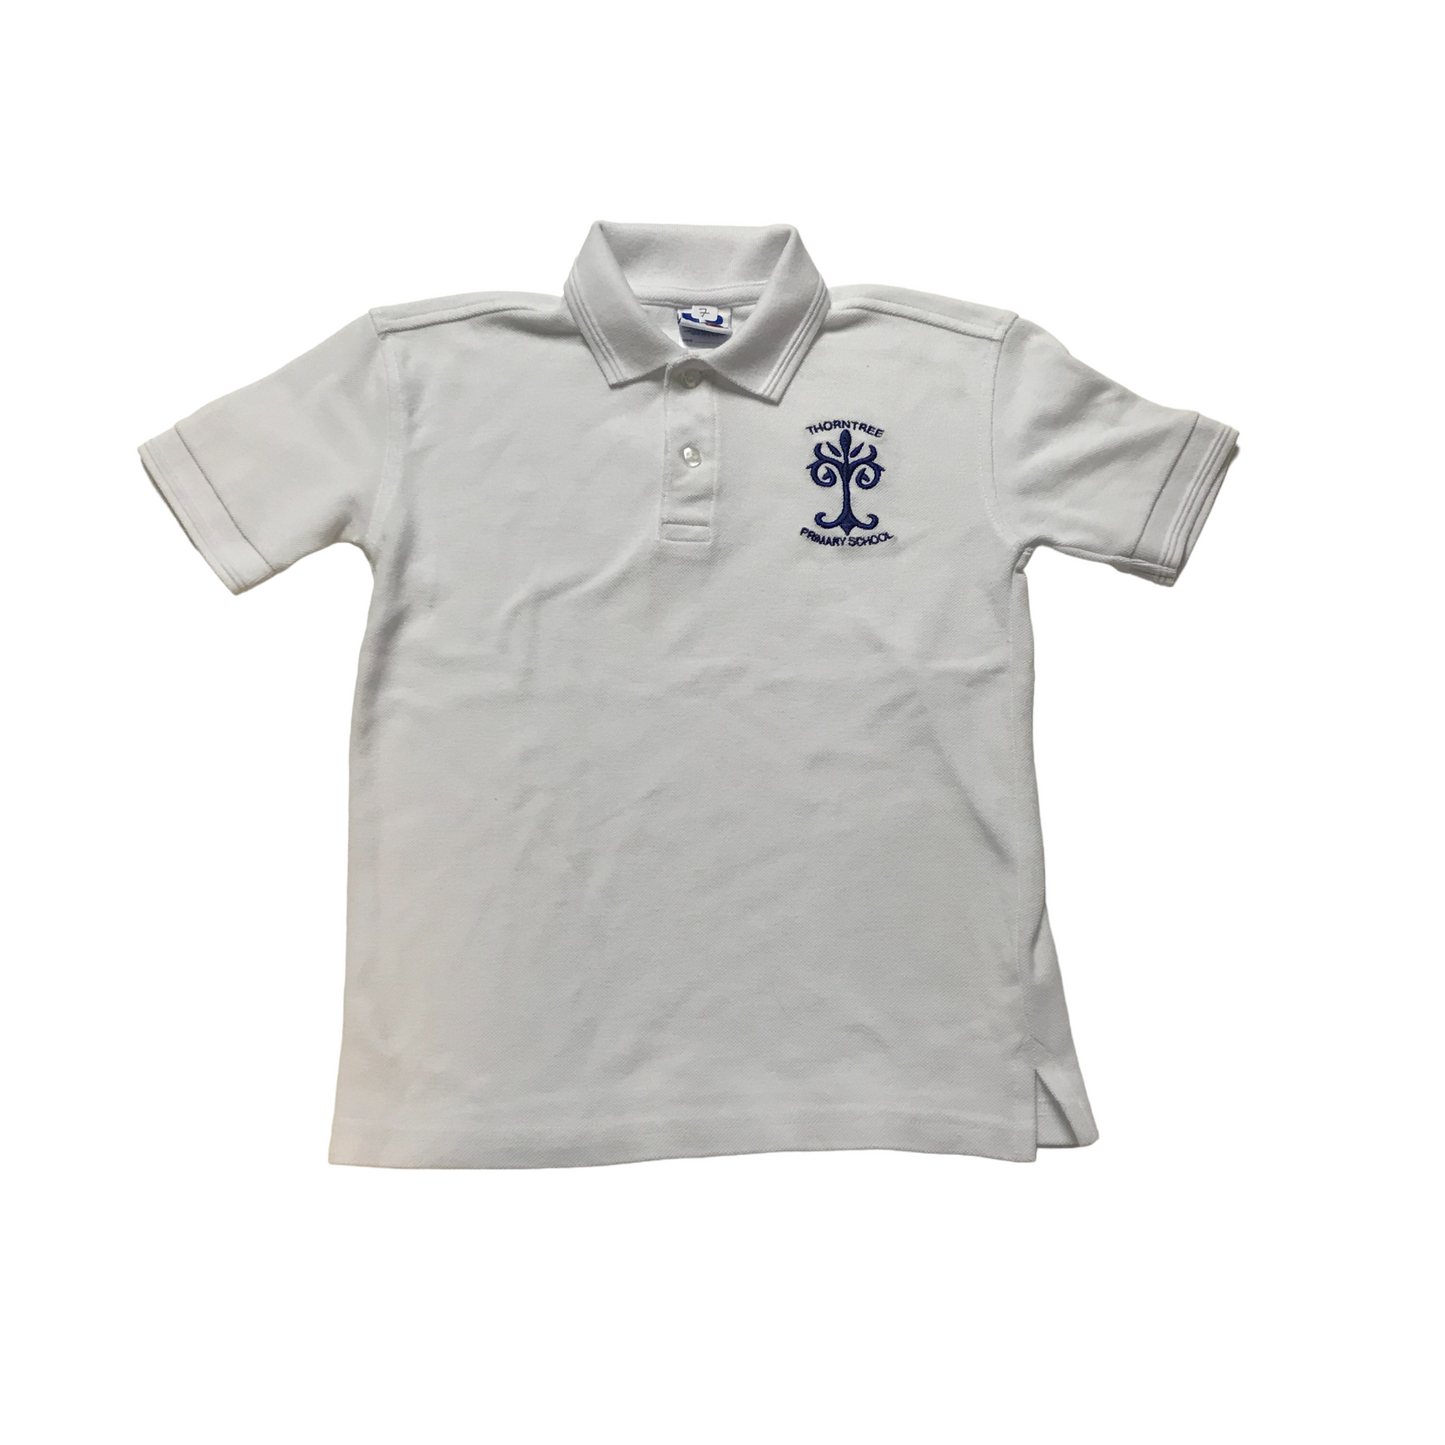 Thorntree Primary White Polo Shirt